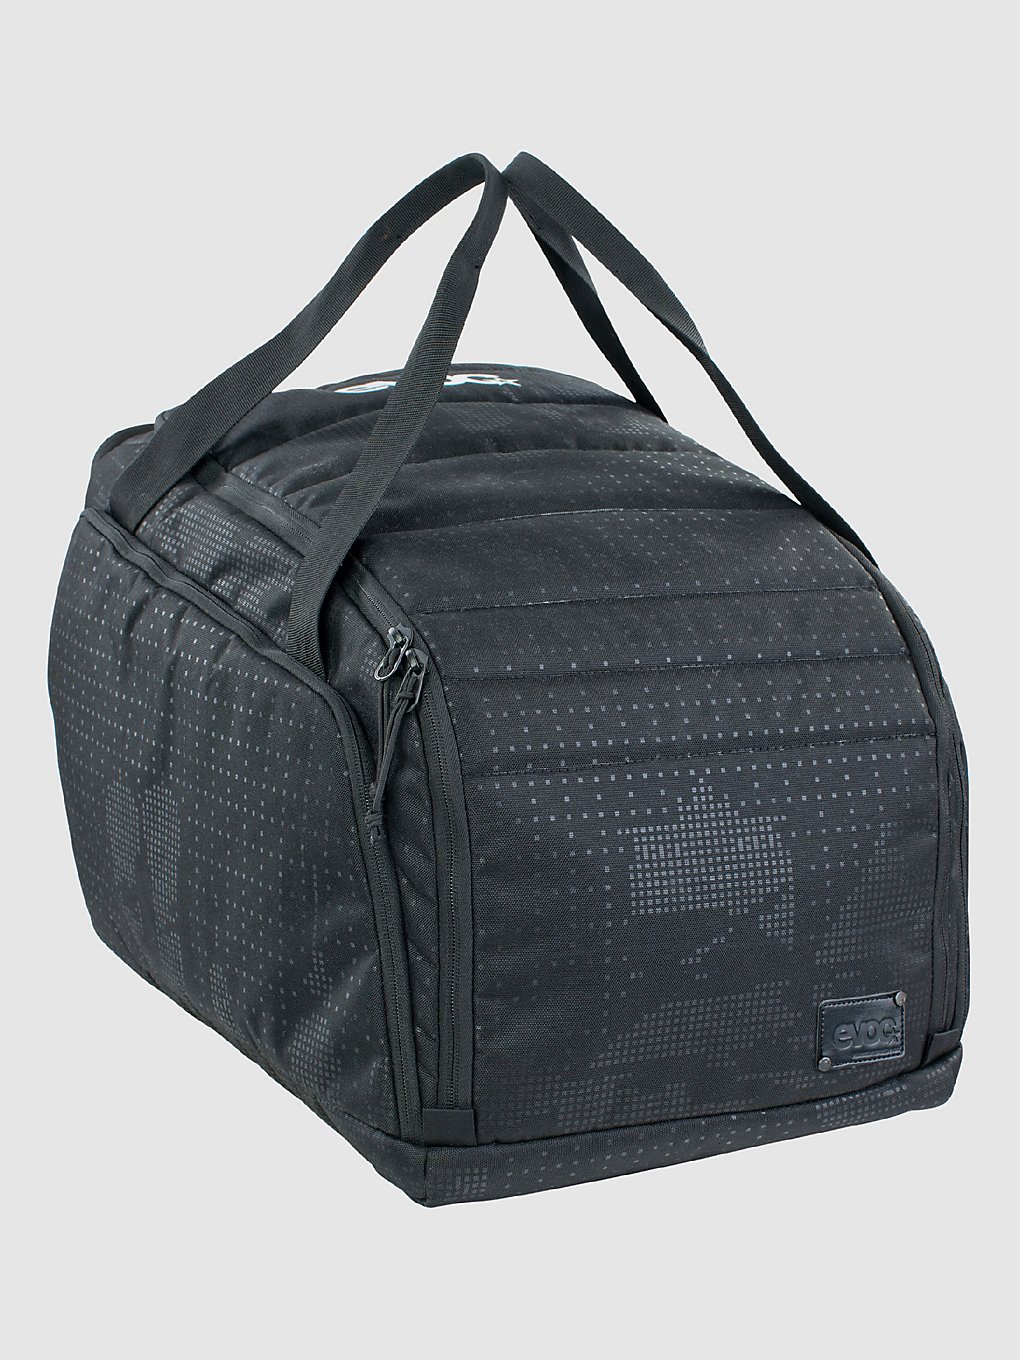 Evoc Gear 35L Bag black kaufen